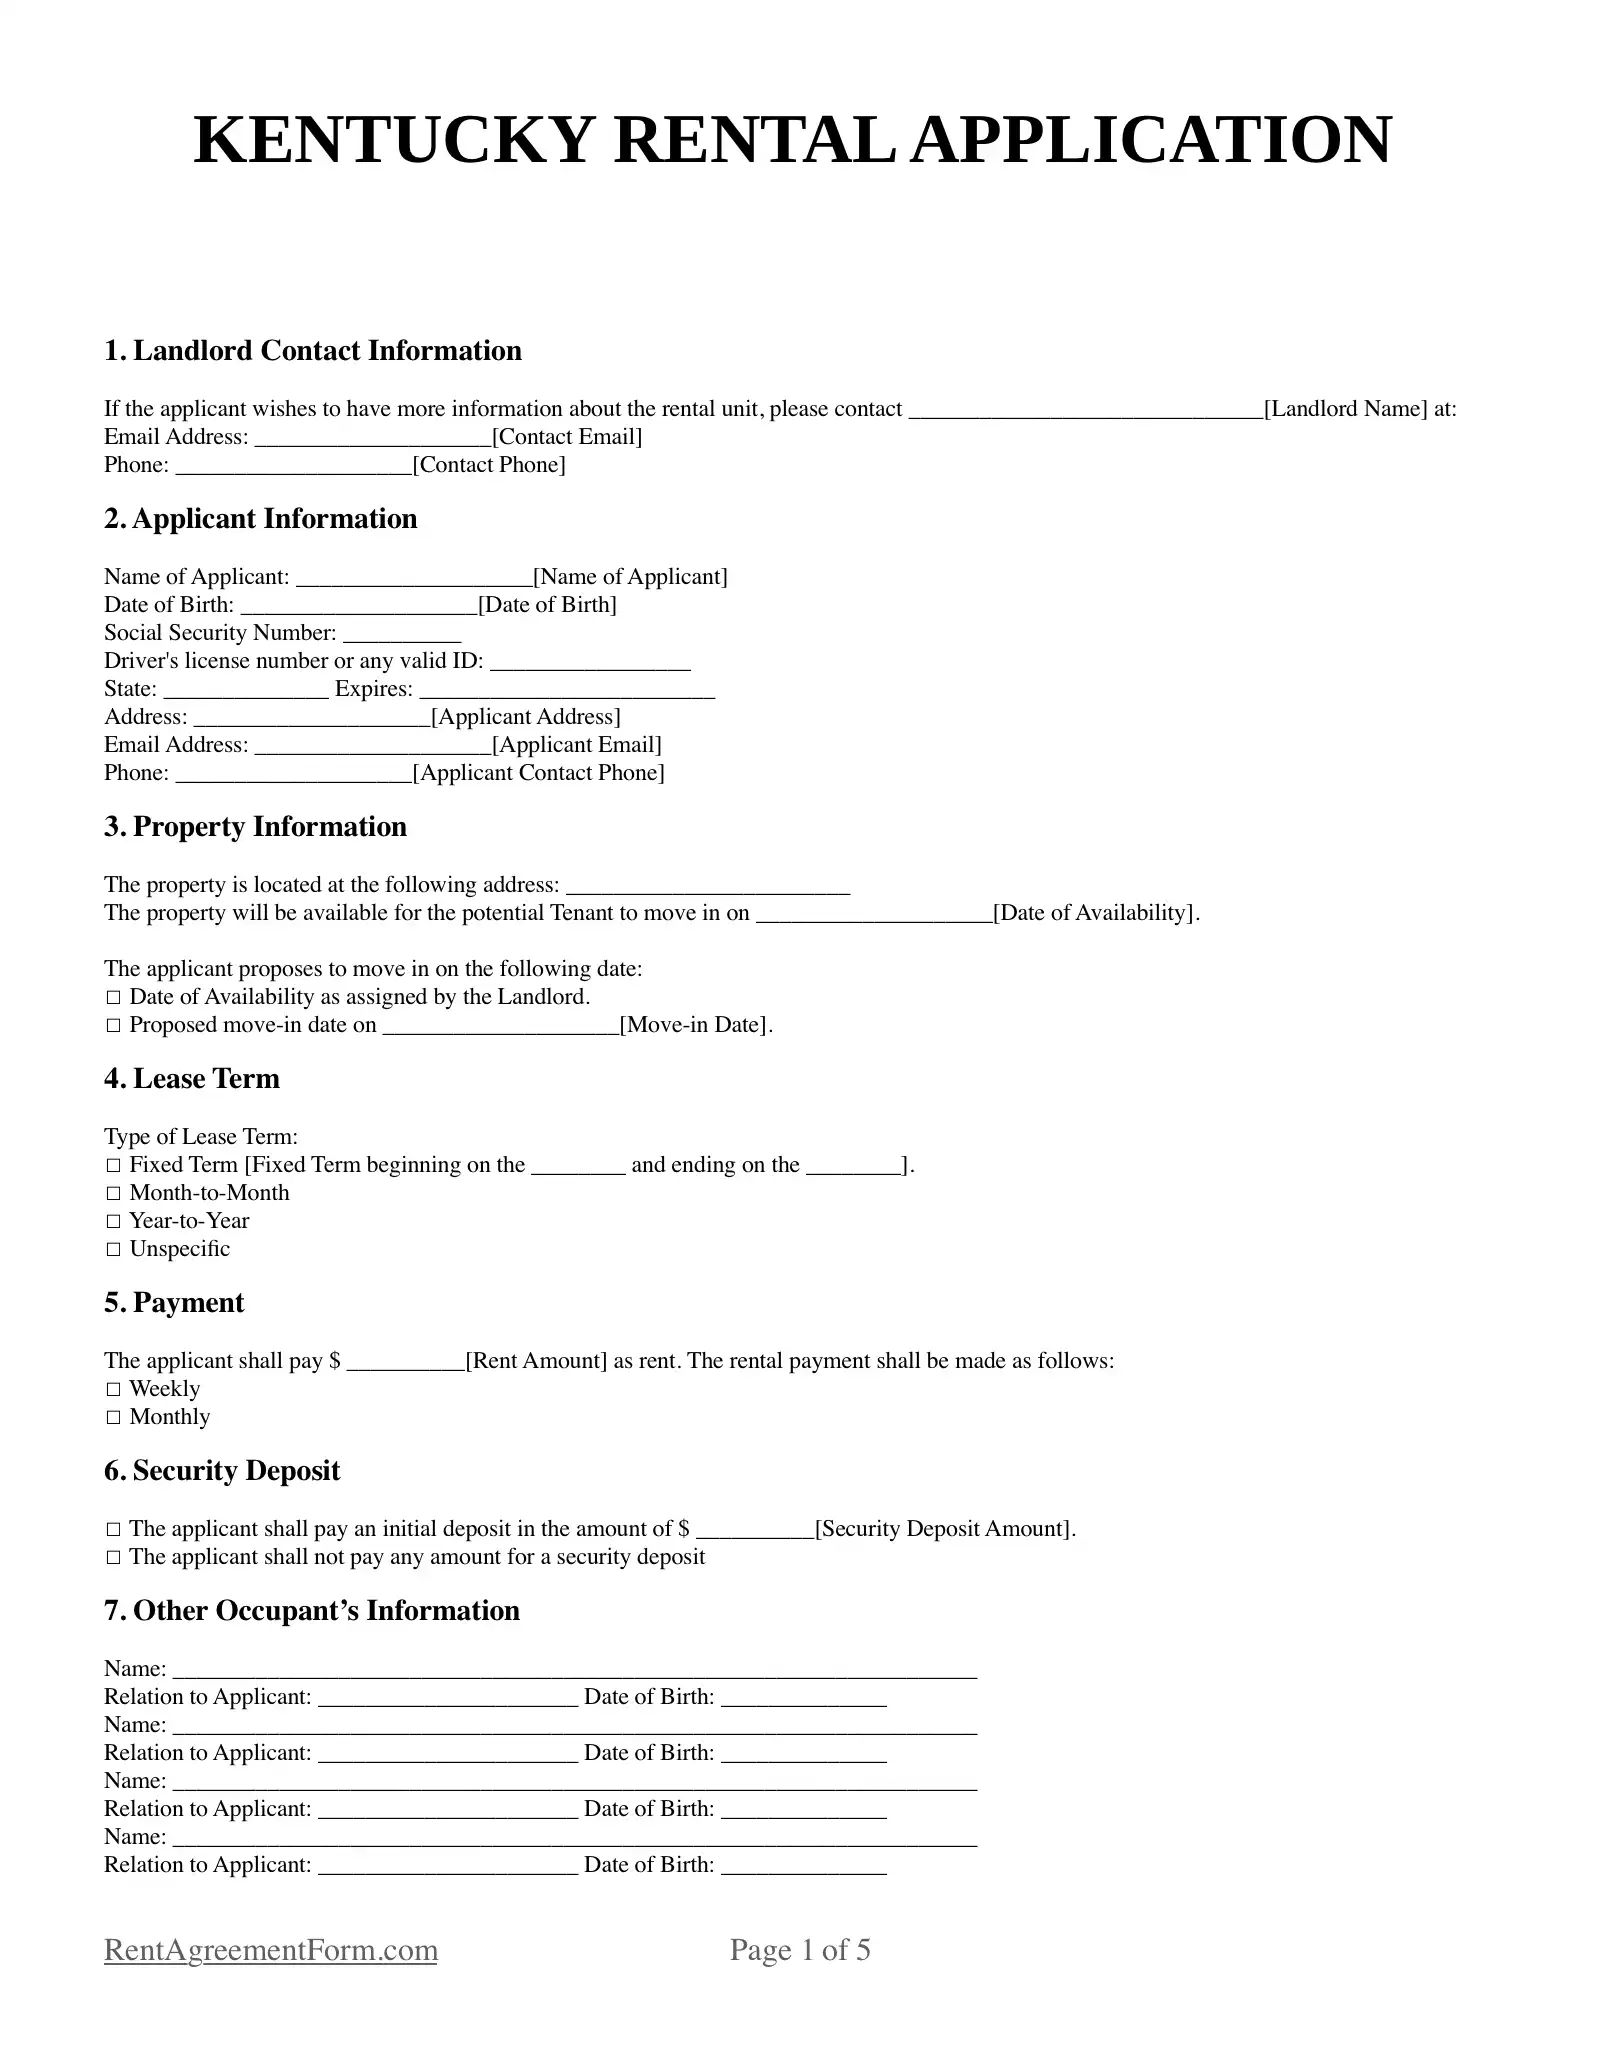 Kentucky Rental Application Sample